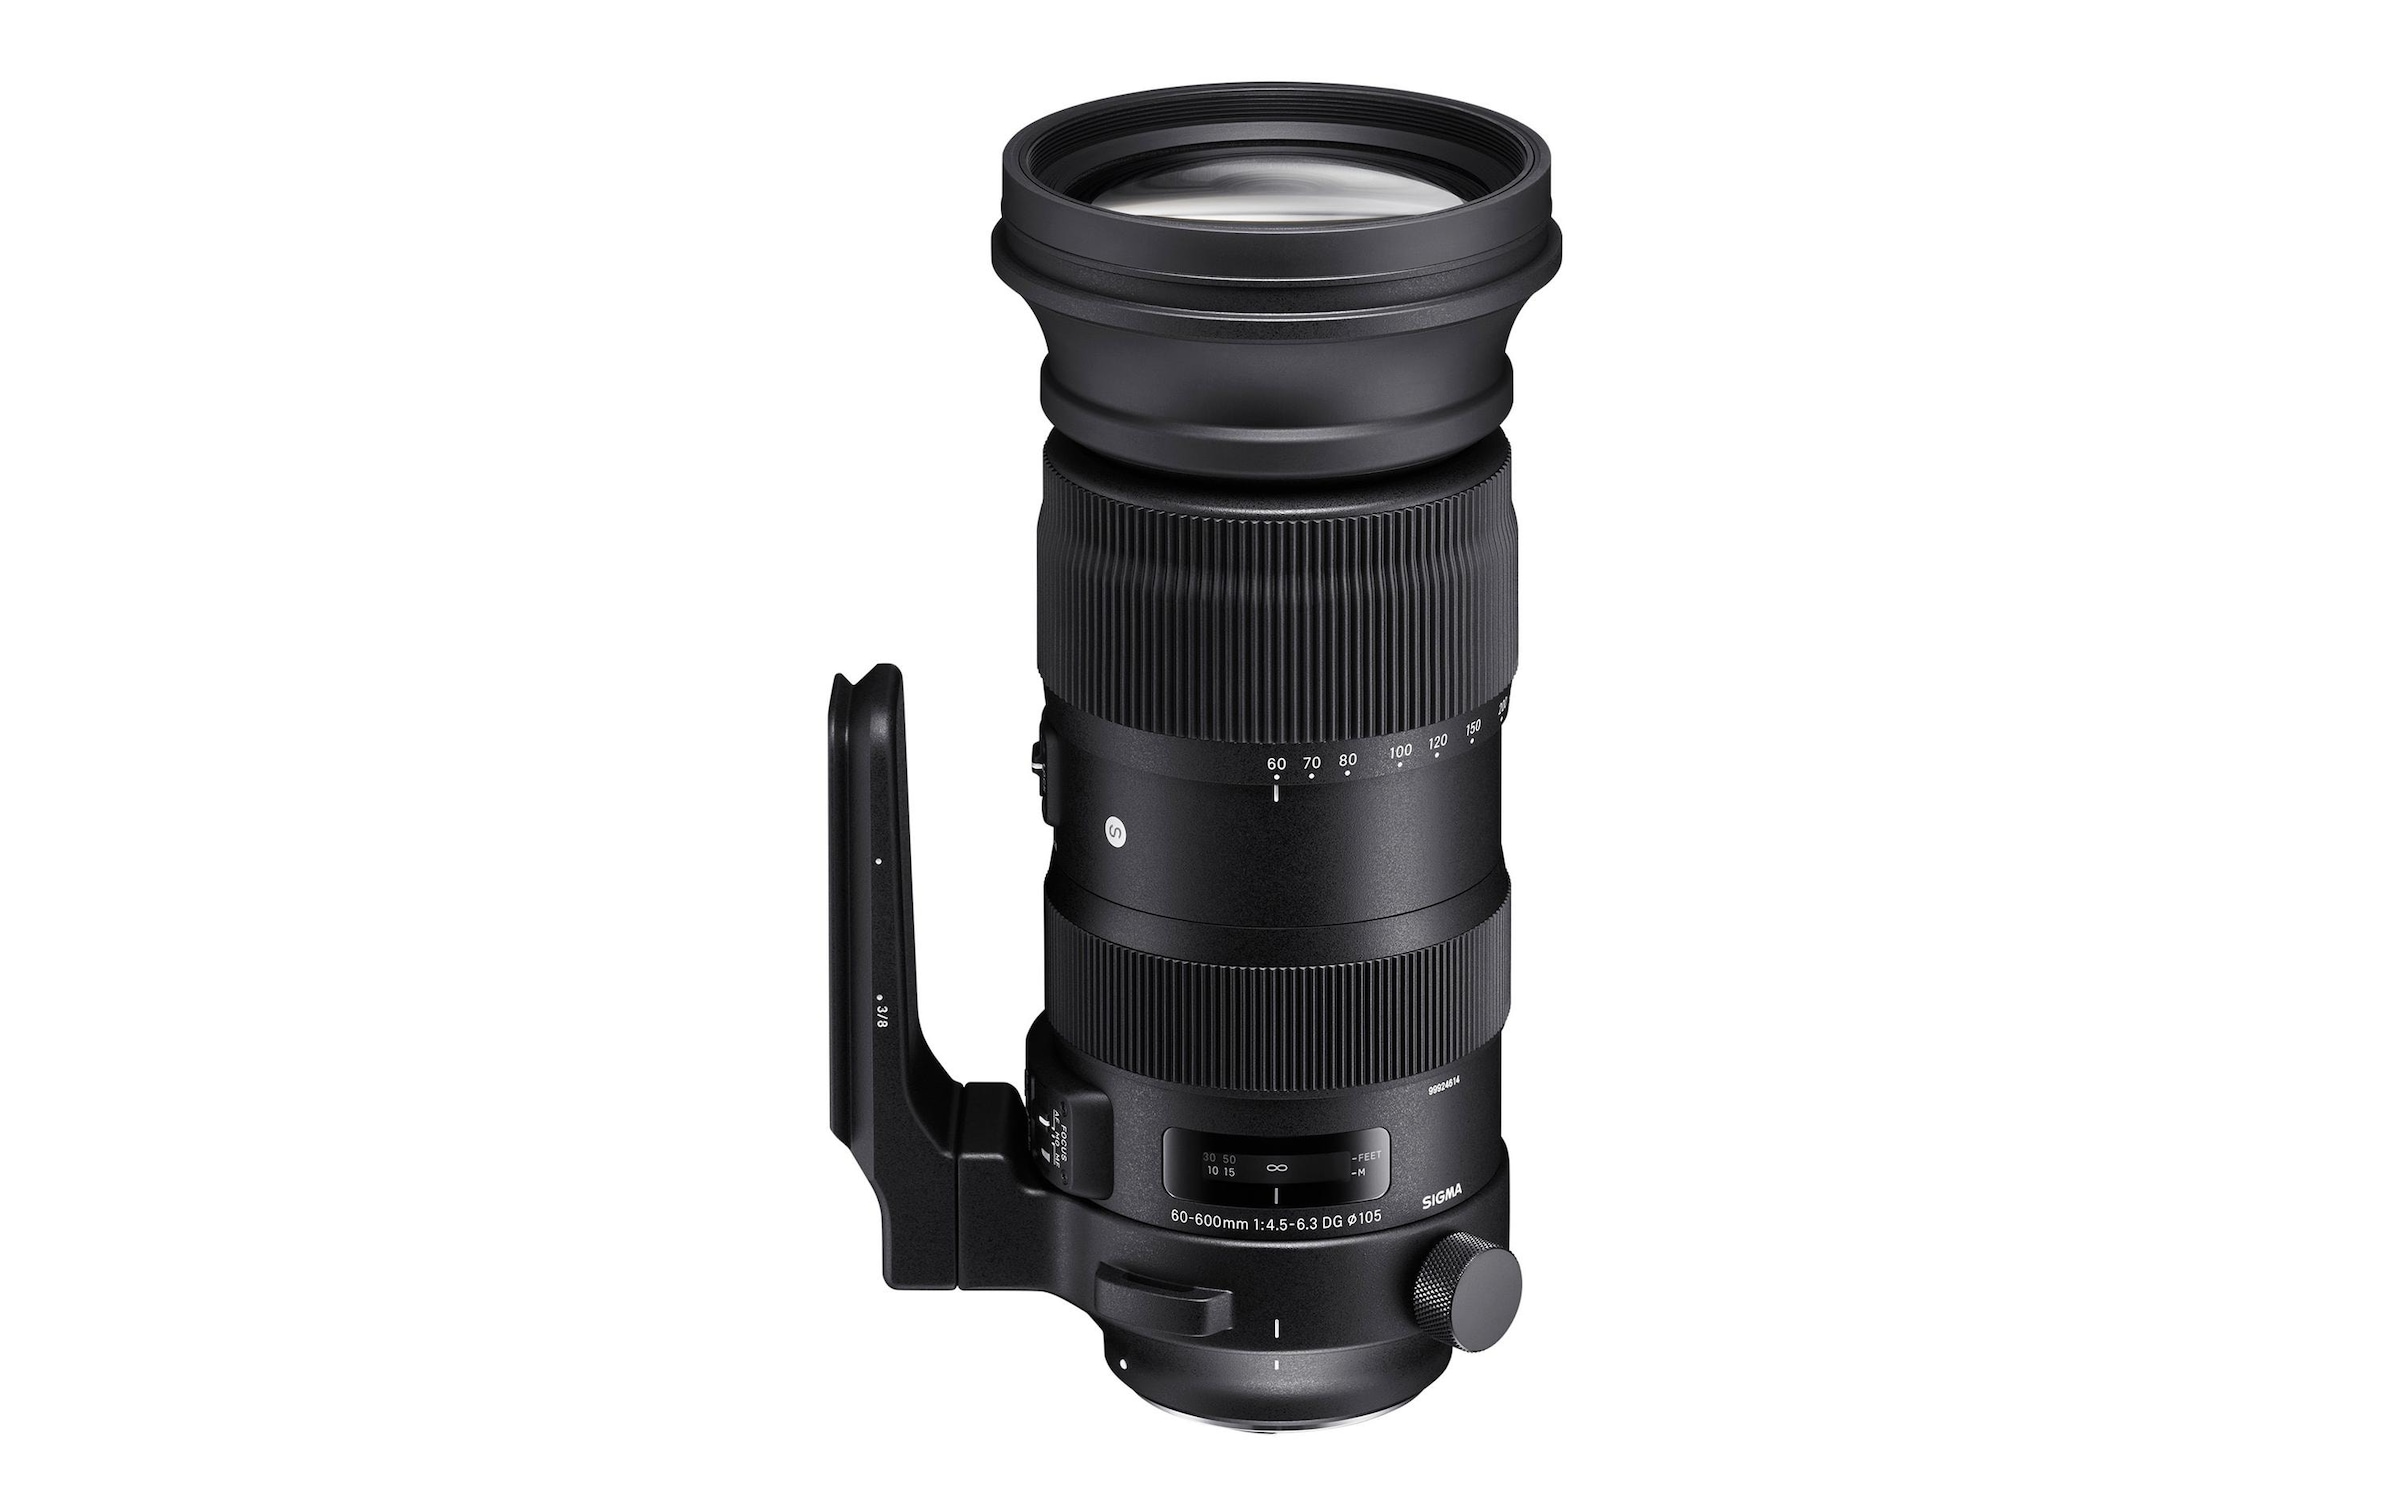 Zoomobjektiv »60-600mm f / 4.5-6.3 DG OS HSM Sp Ca«